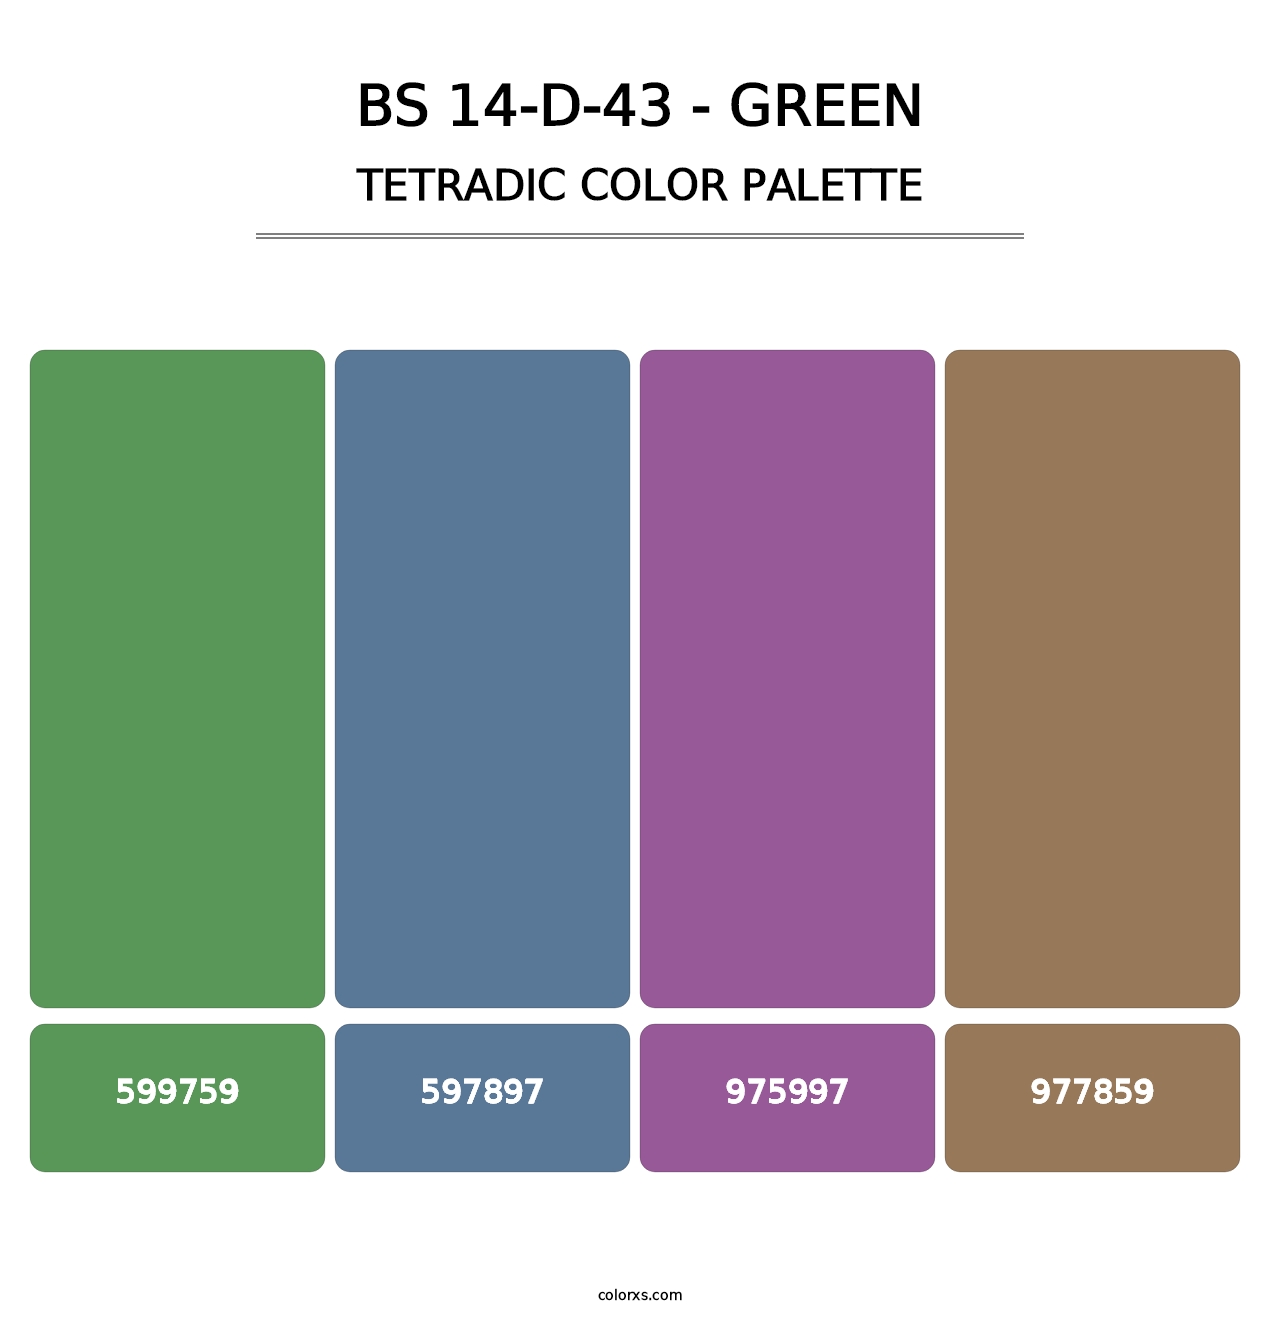 BS 14-D-43 - Green - Tetradic Color Palette